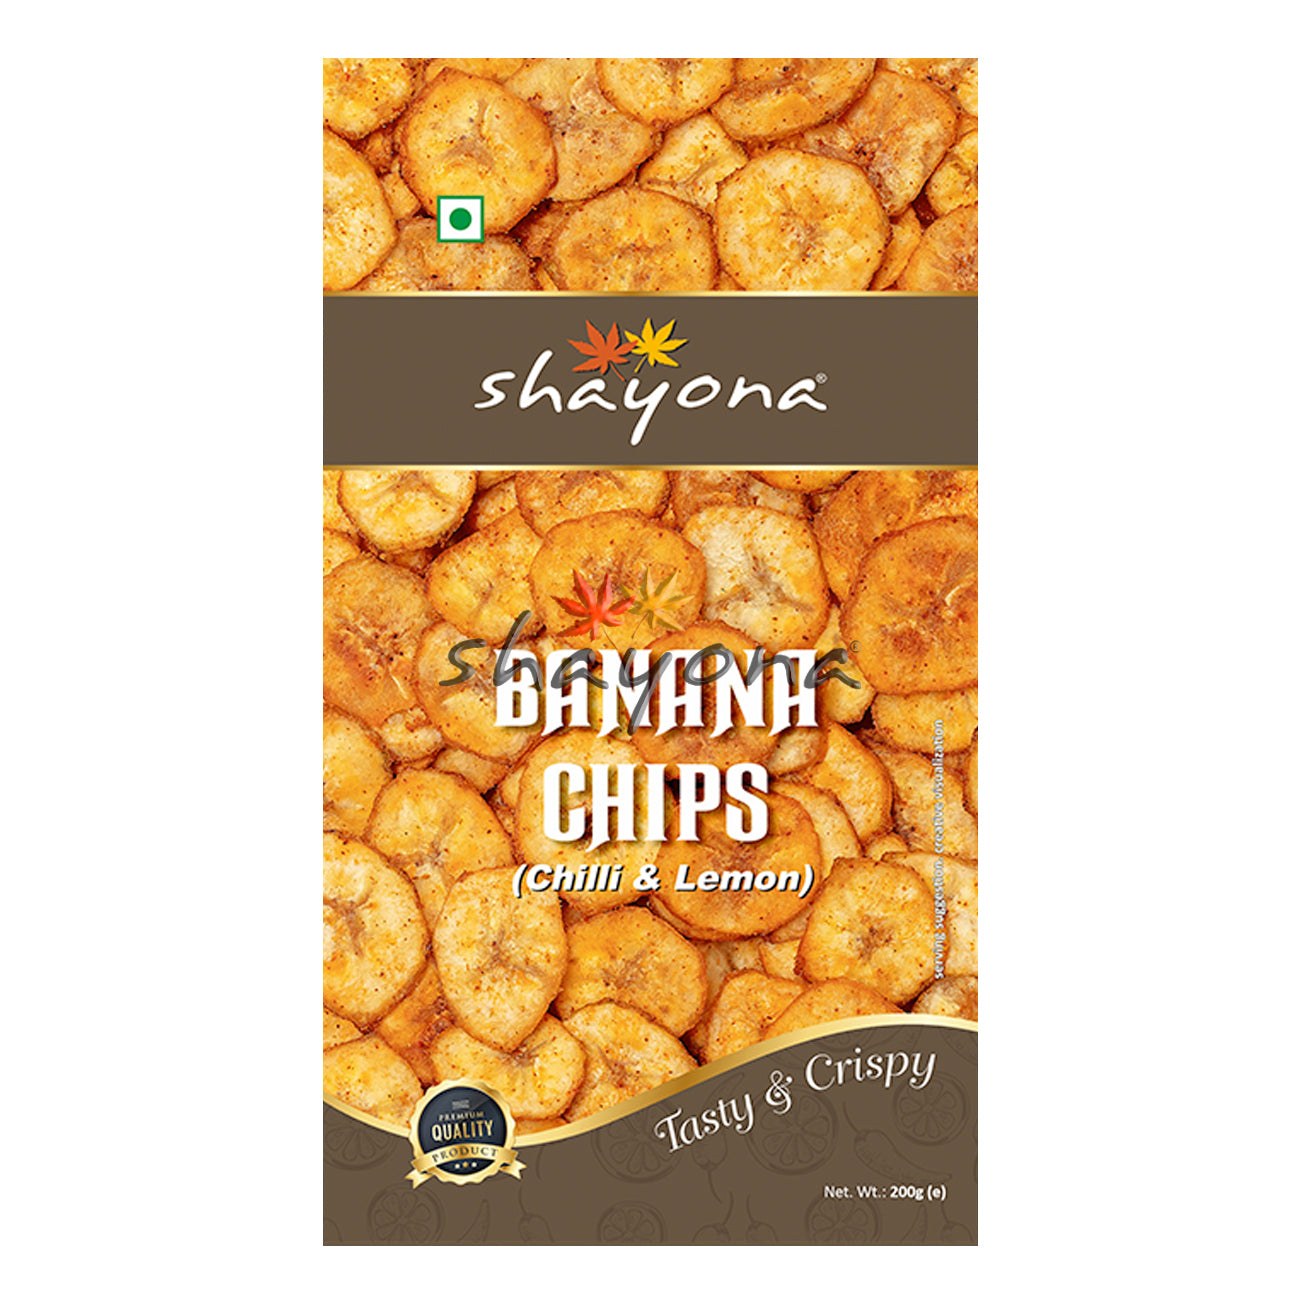 Shayona Banana Chips - Chilli & Lemon